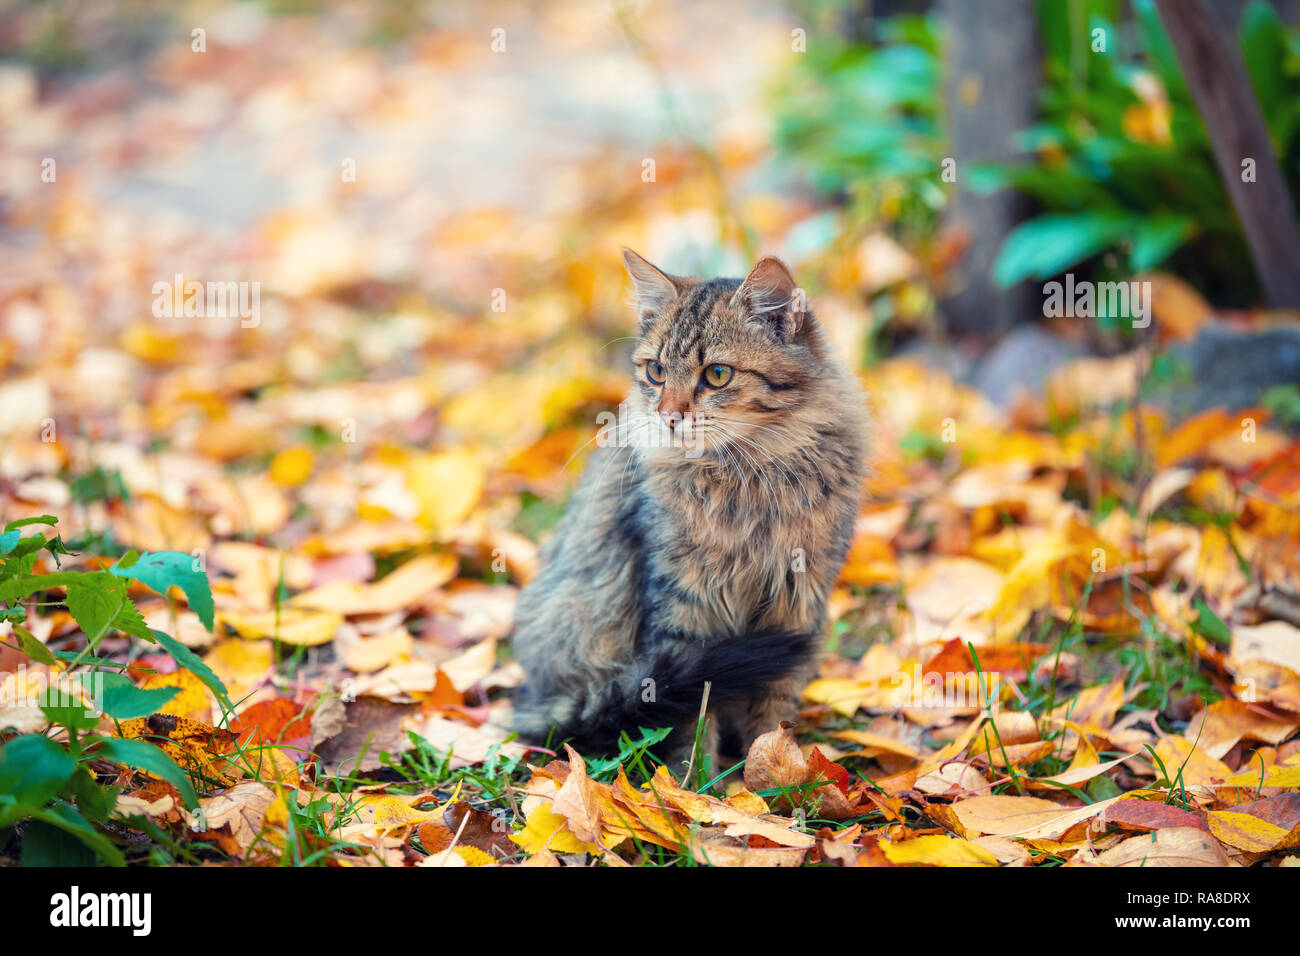 Cute siberian cat sitting on the fallen leaves in the autumn garden Stock Photo